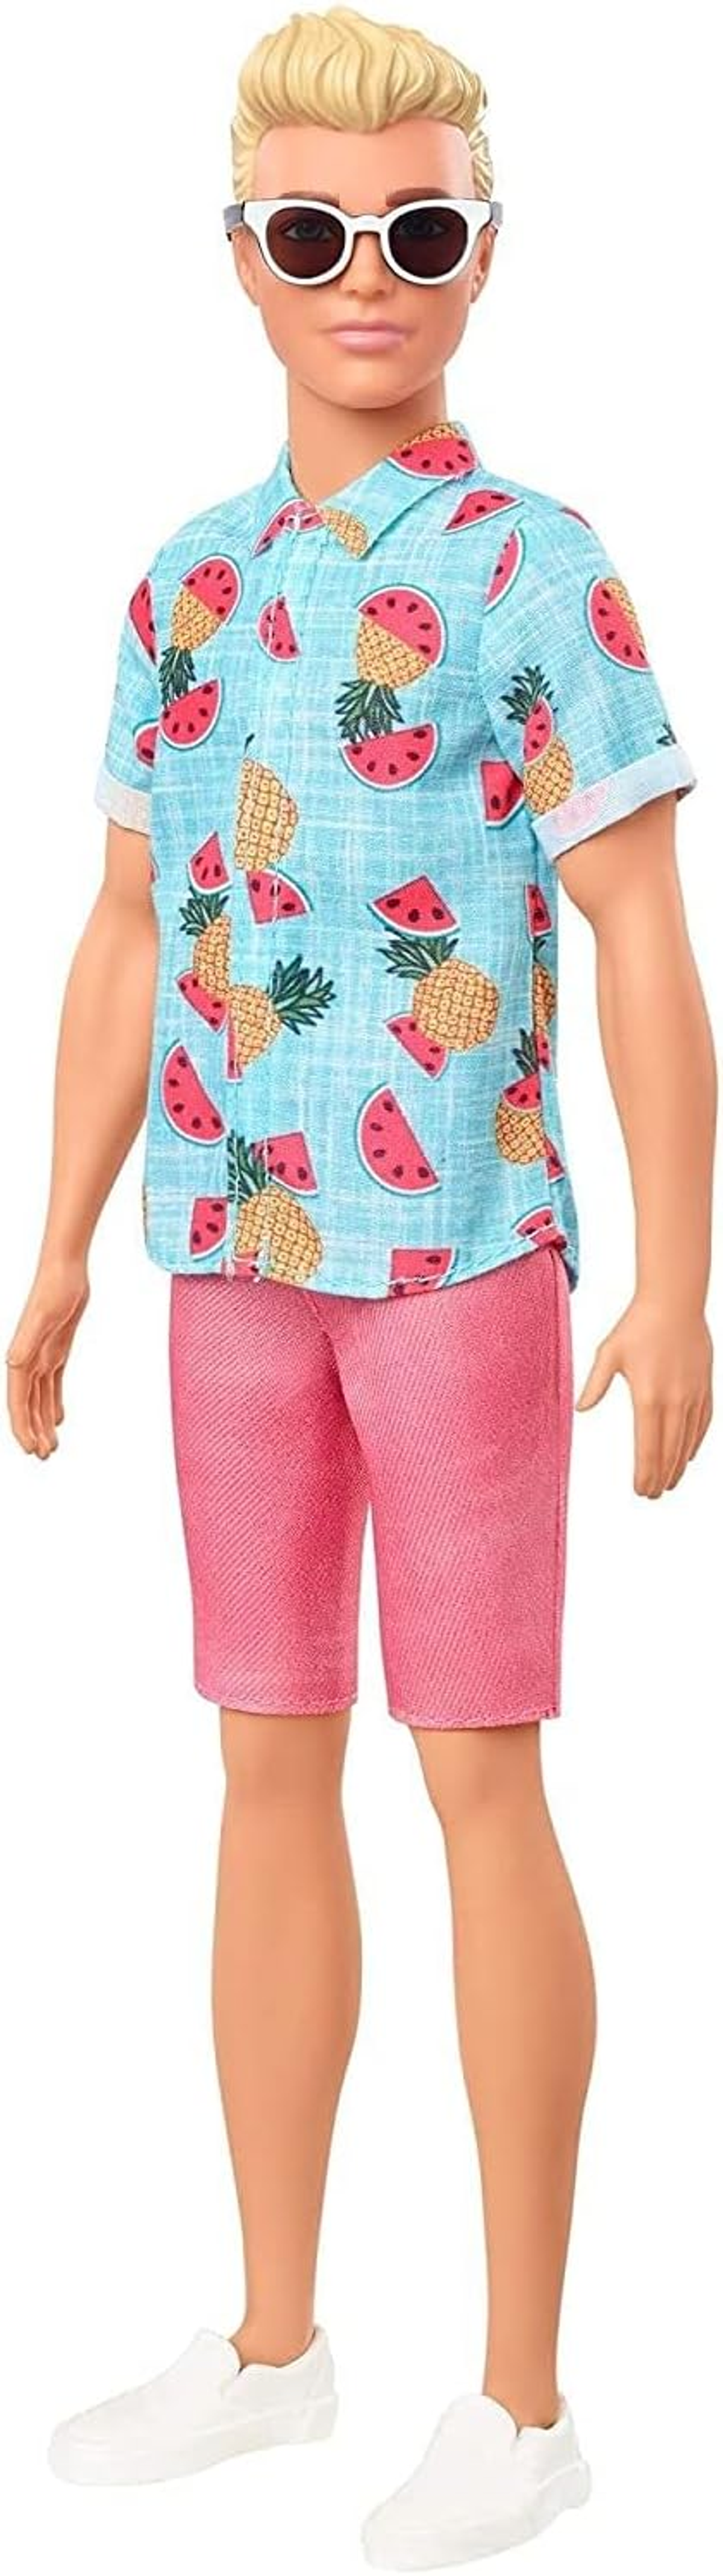 MATTEL Barbie Ken Fashionista Spielzeugpuppe Tropical GRB04